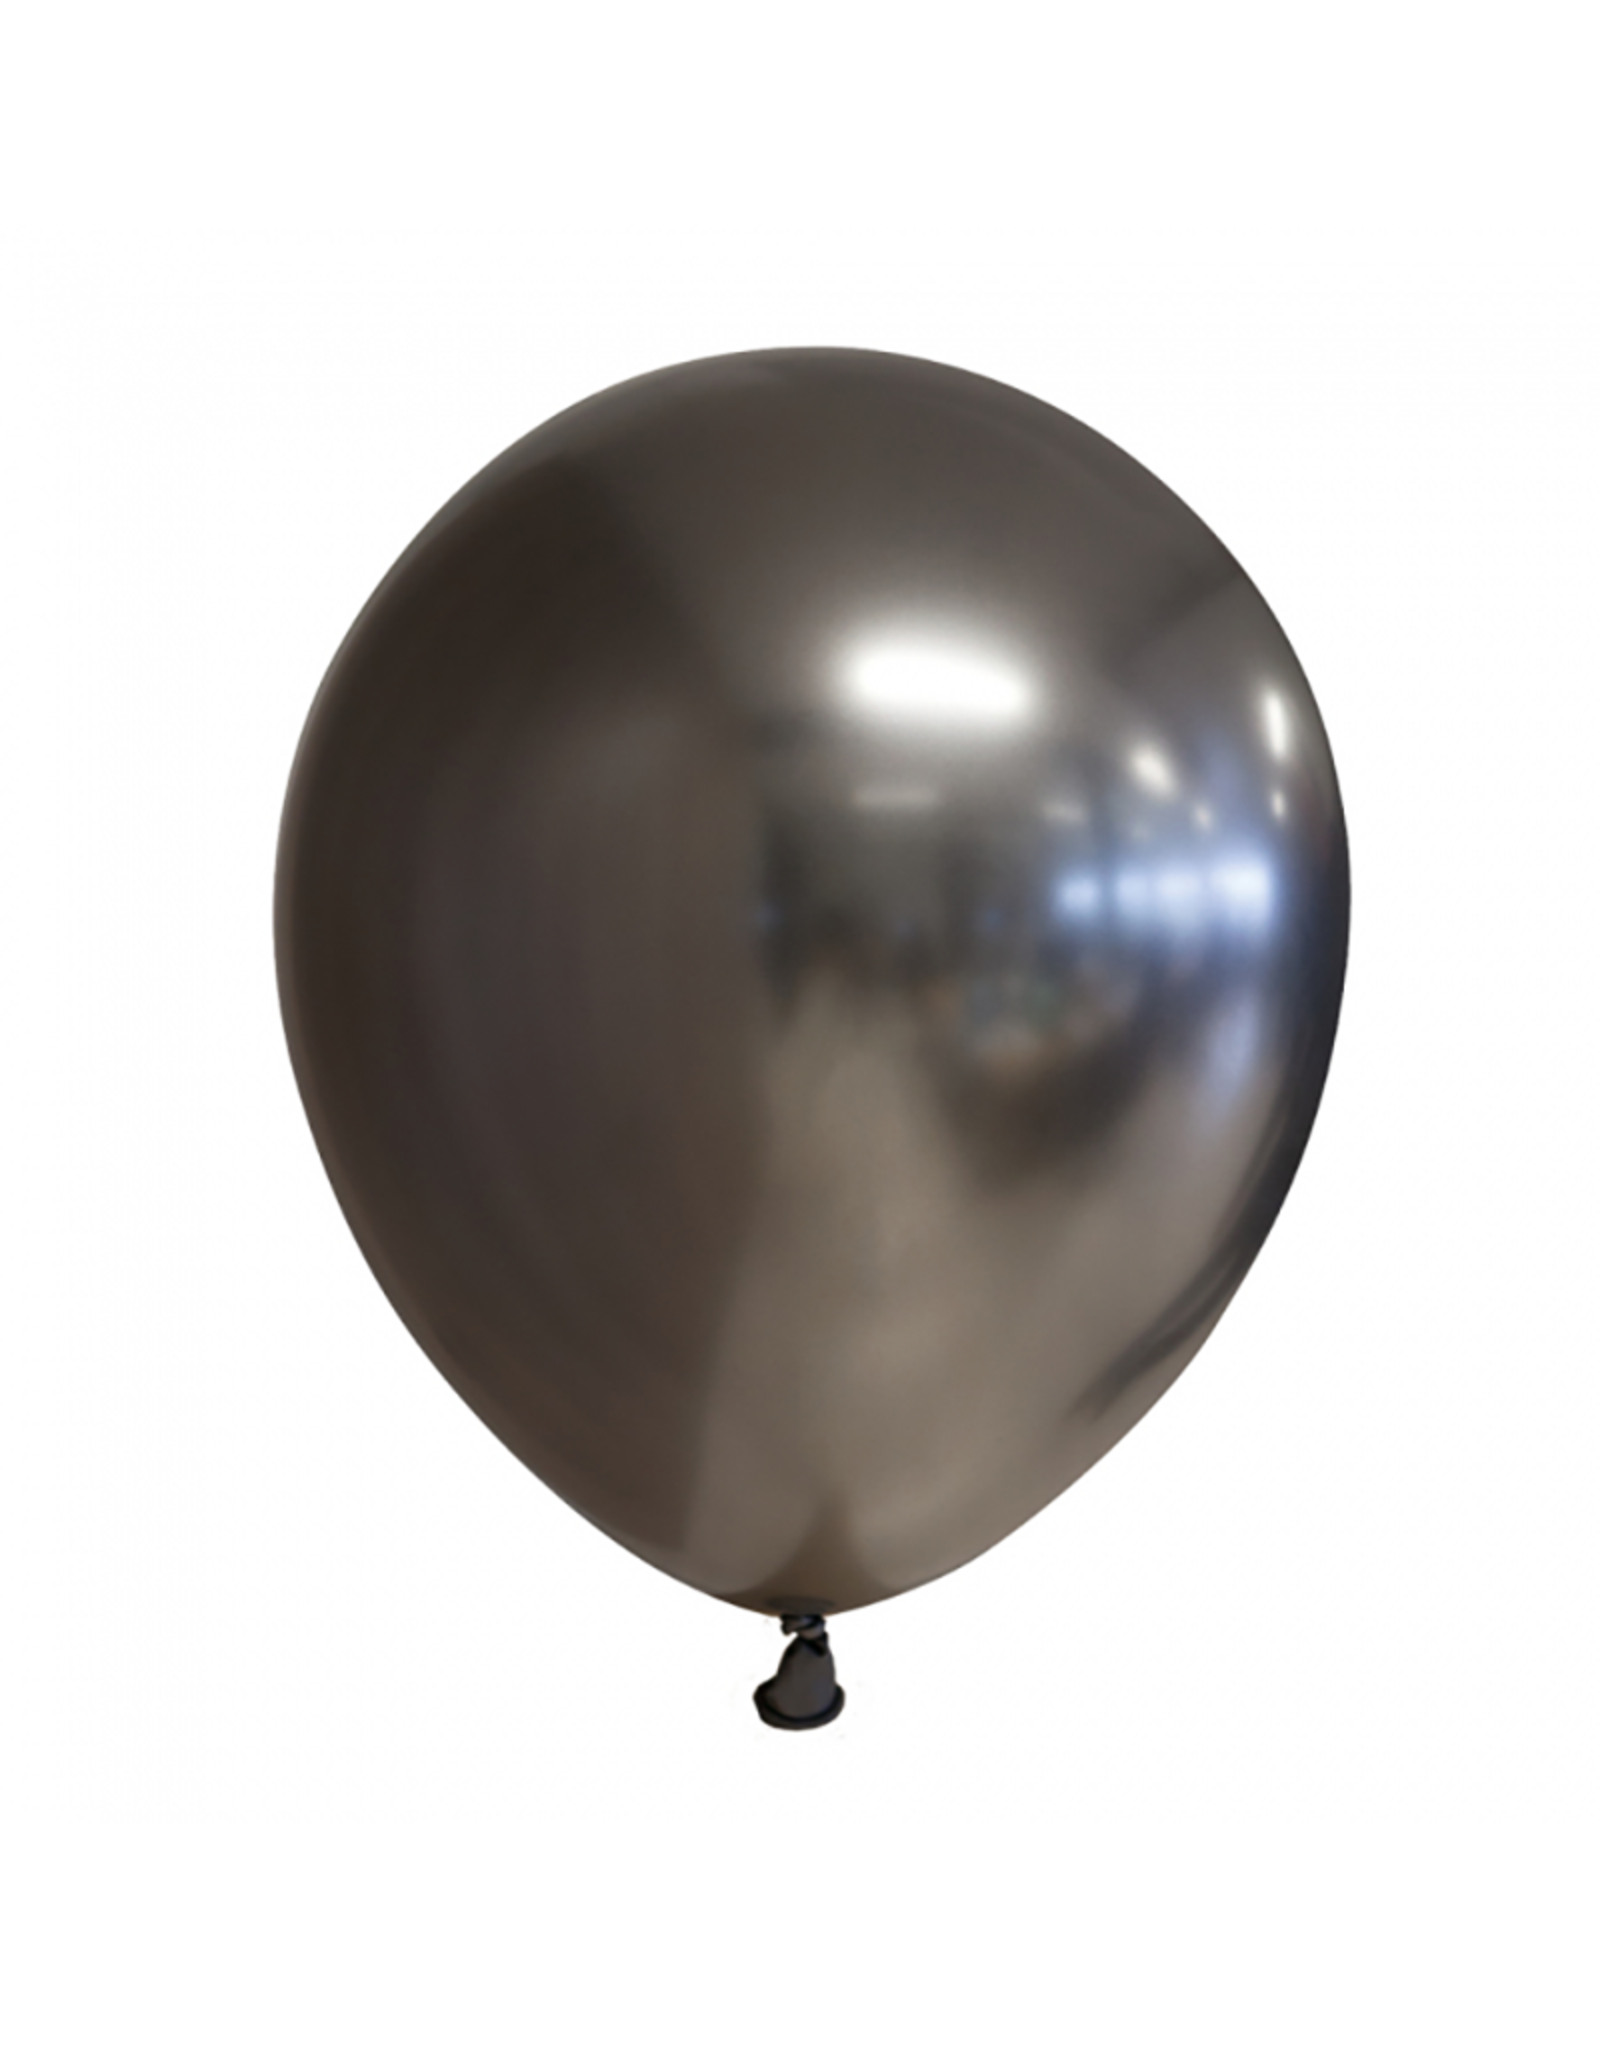 Chrome ballonnen donkergrijs (30 cm) | 10st